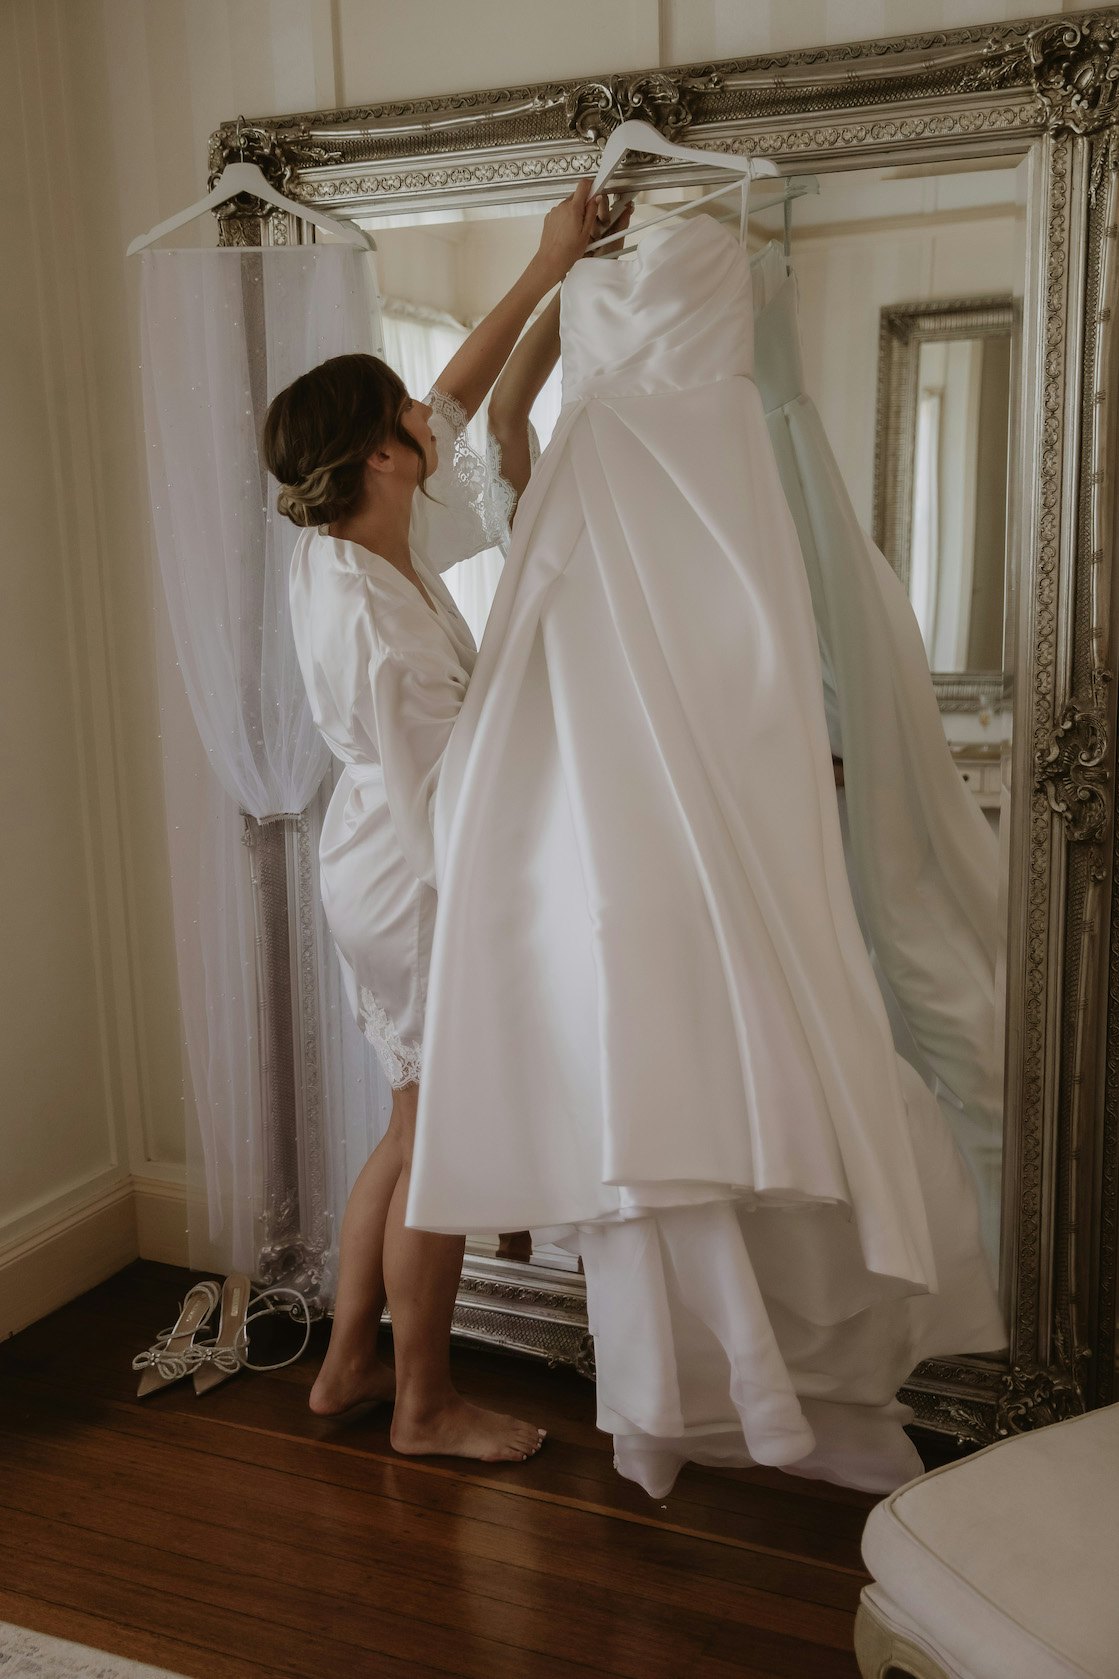 Bride hanging wedding dress on mirror 